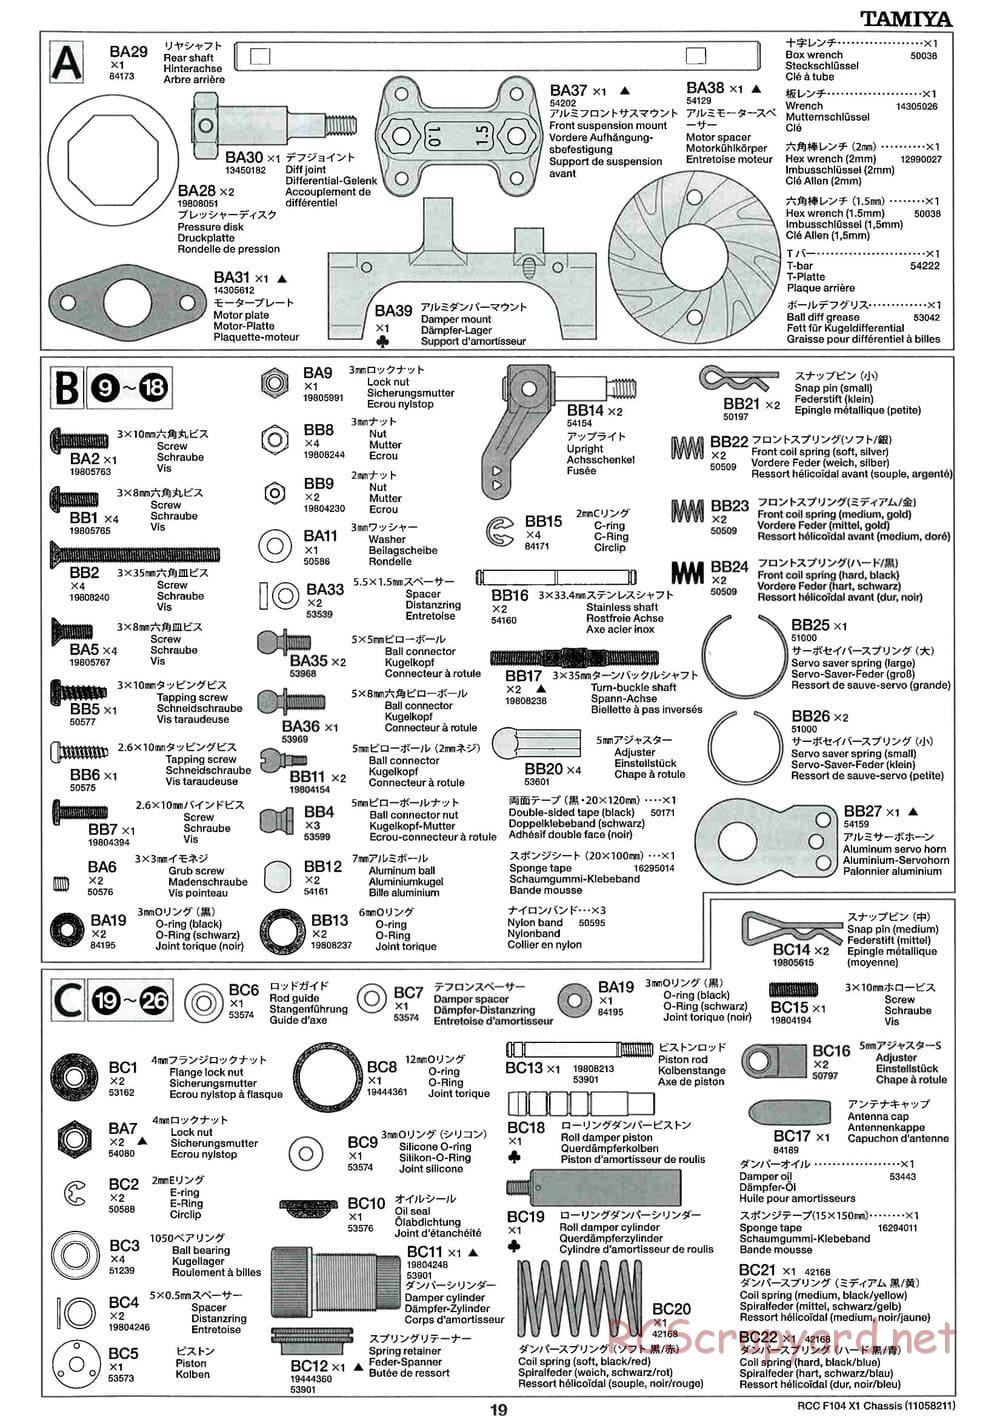 Tamiya - F104X1 Chassis - Manual - Page 19